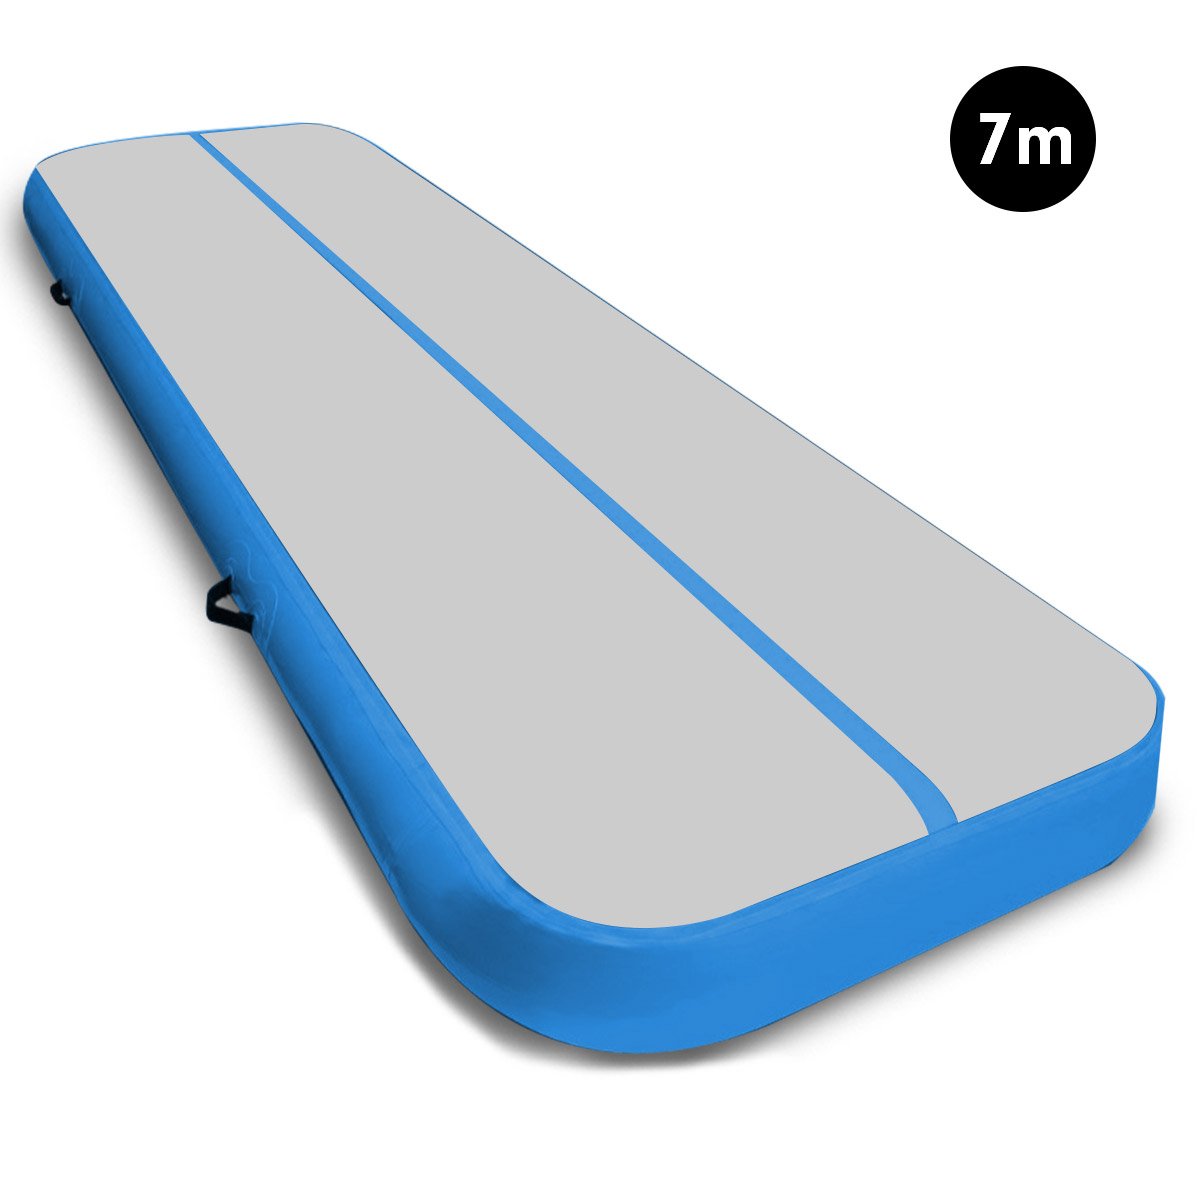 7m x 1m Air Track Inflatable Gymnastics Mat Tumbling - Grey Blue 1